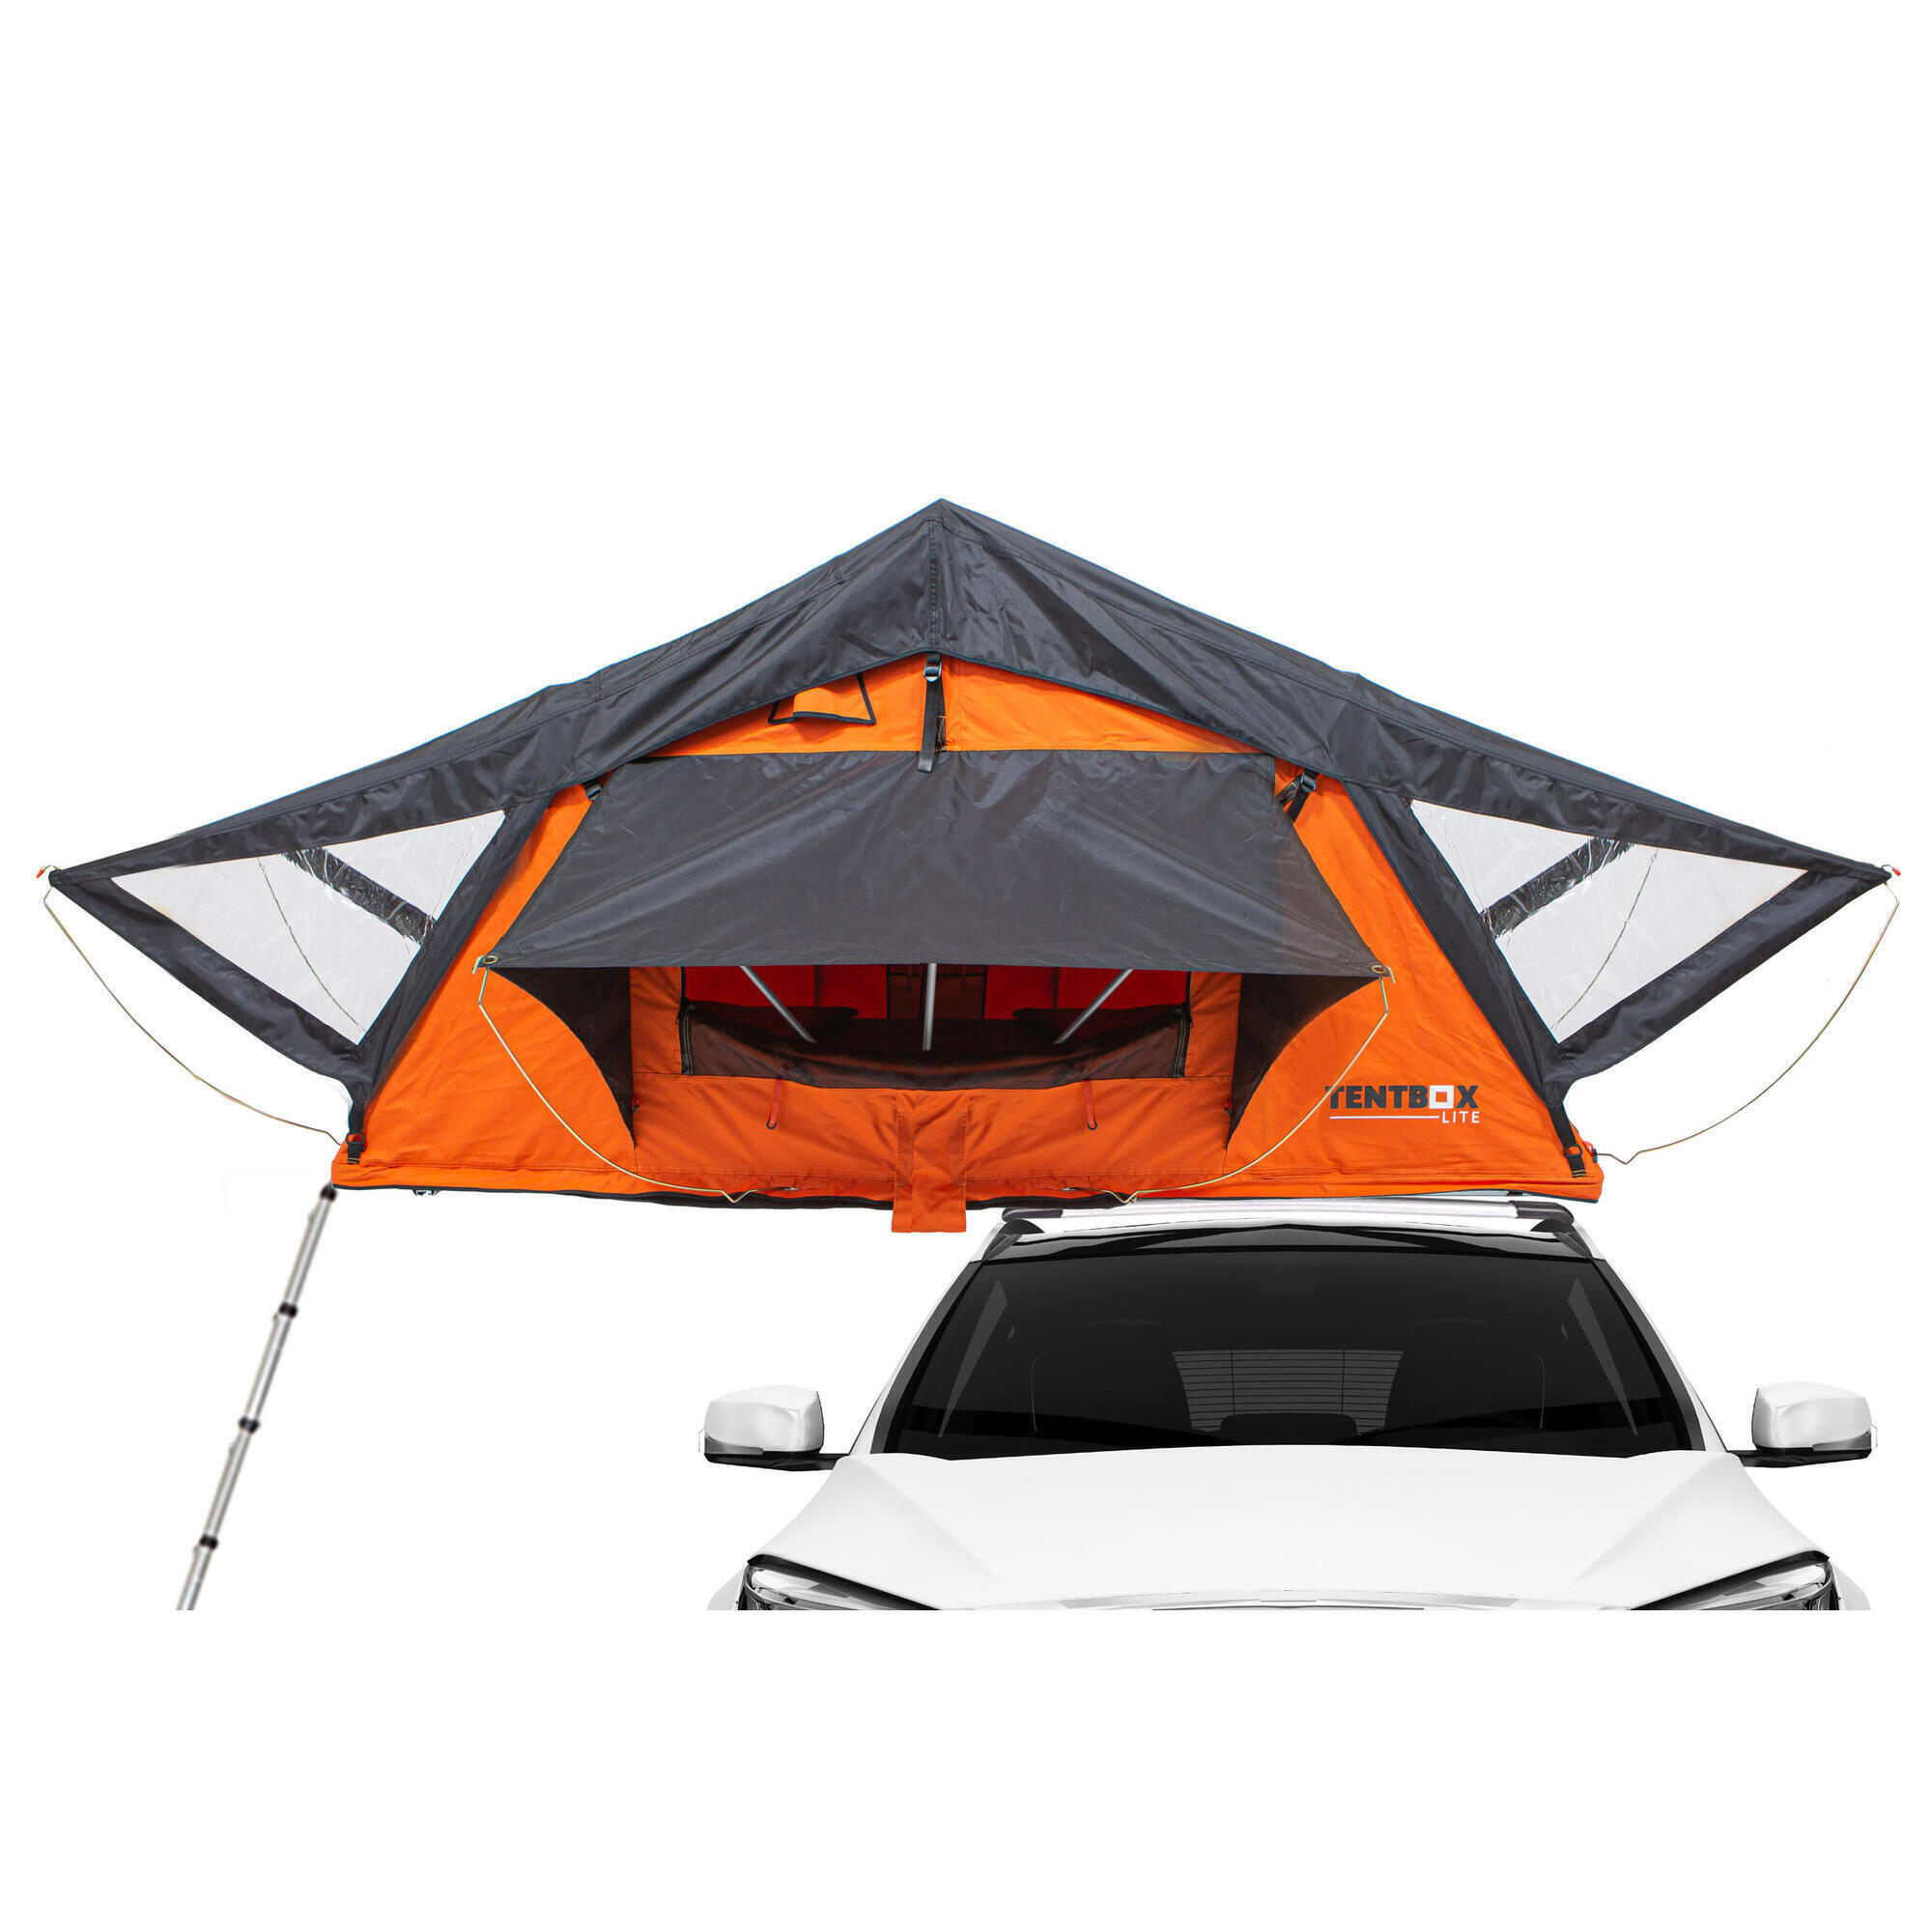 TENTBOX TentBox Lite Roof Tent (Orange)